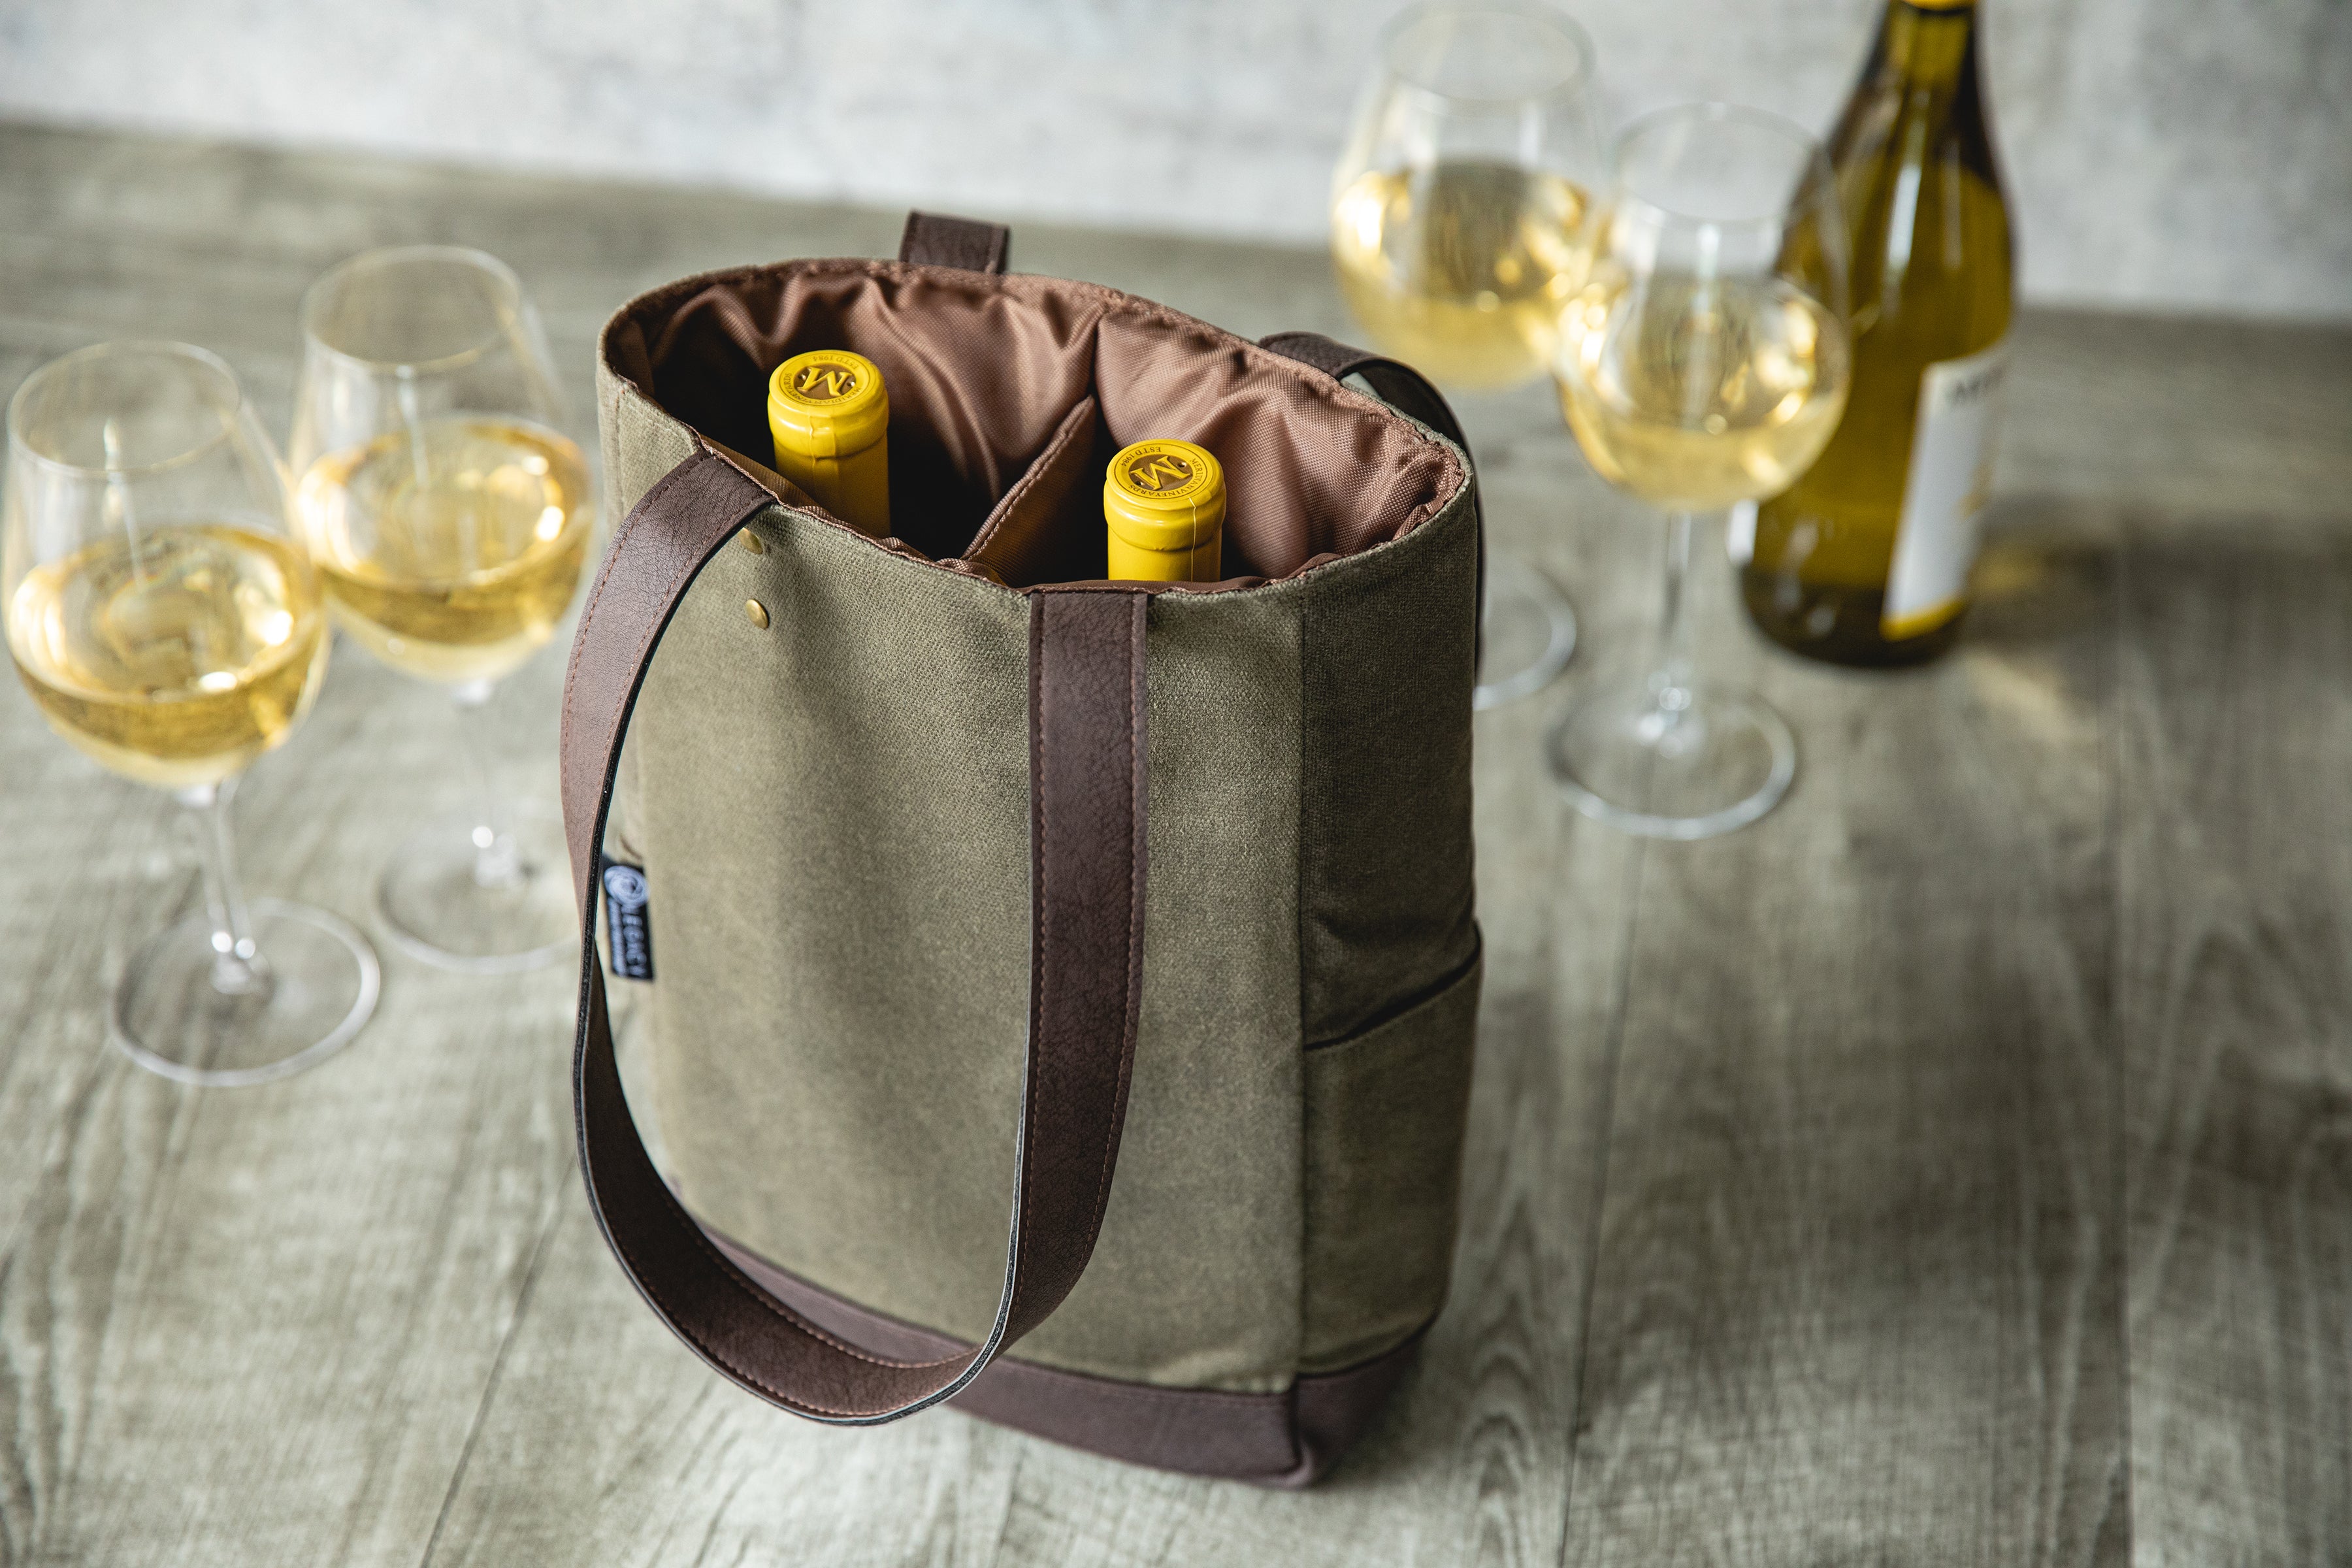 Los Angeles Dodgers - 2 Bottle Insulated Wine Cooler Bag